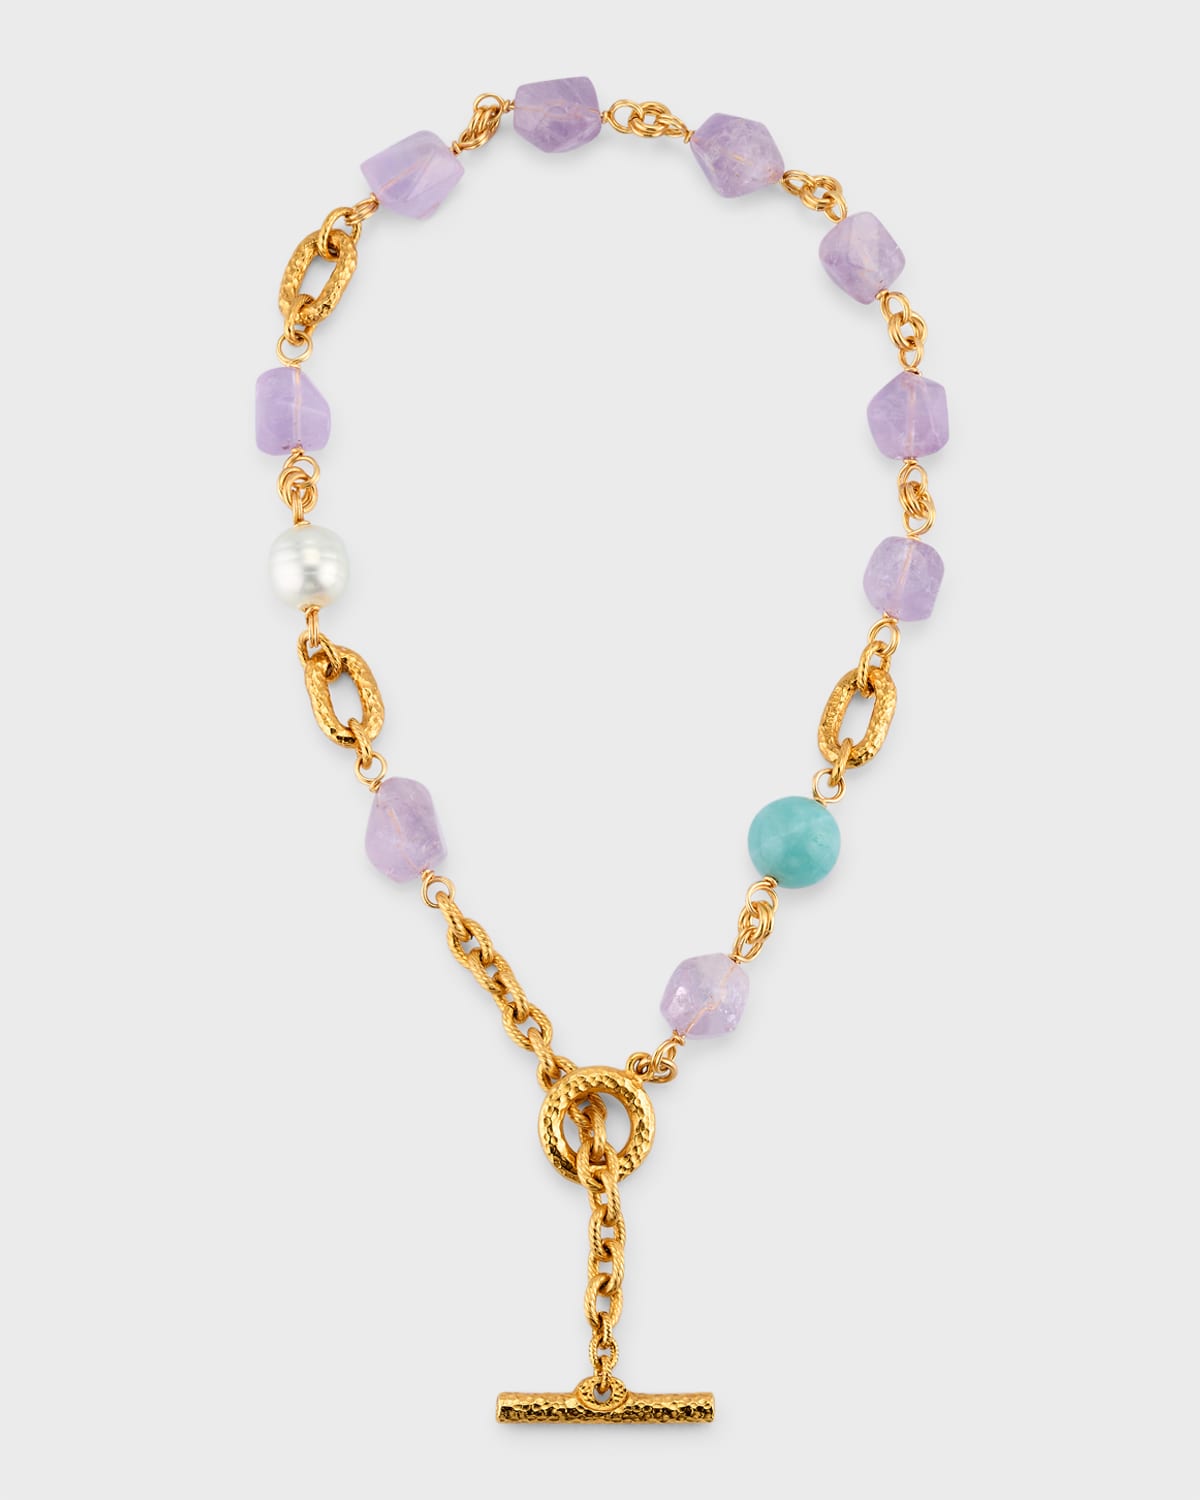 Pearl and Semiprecious Stone Toggle Necklace